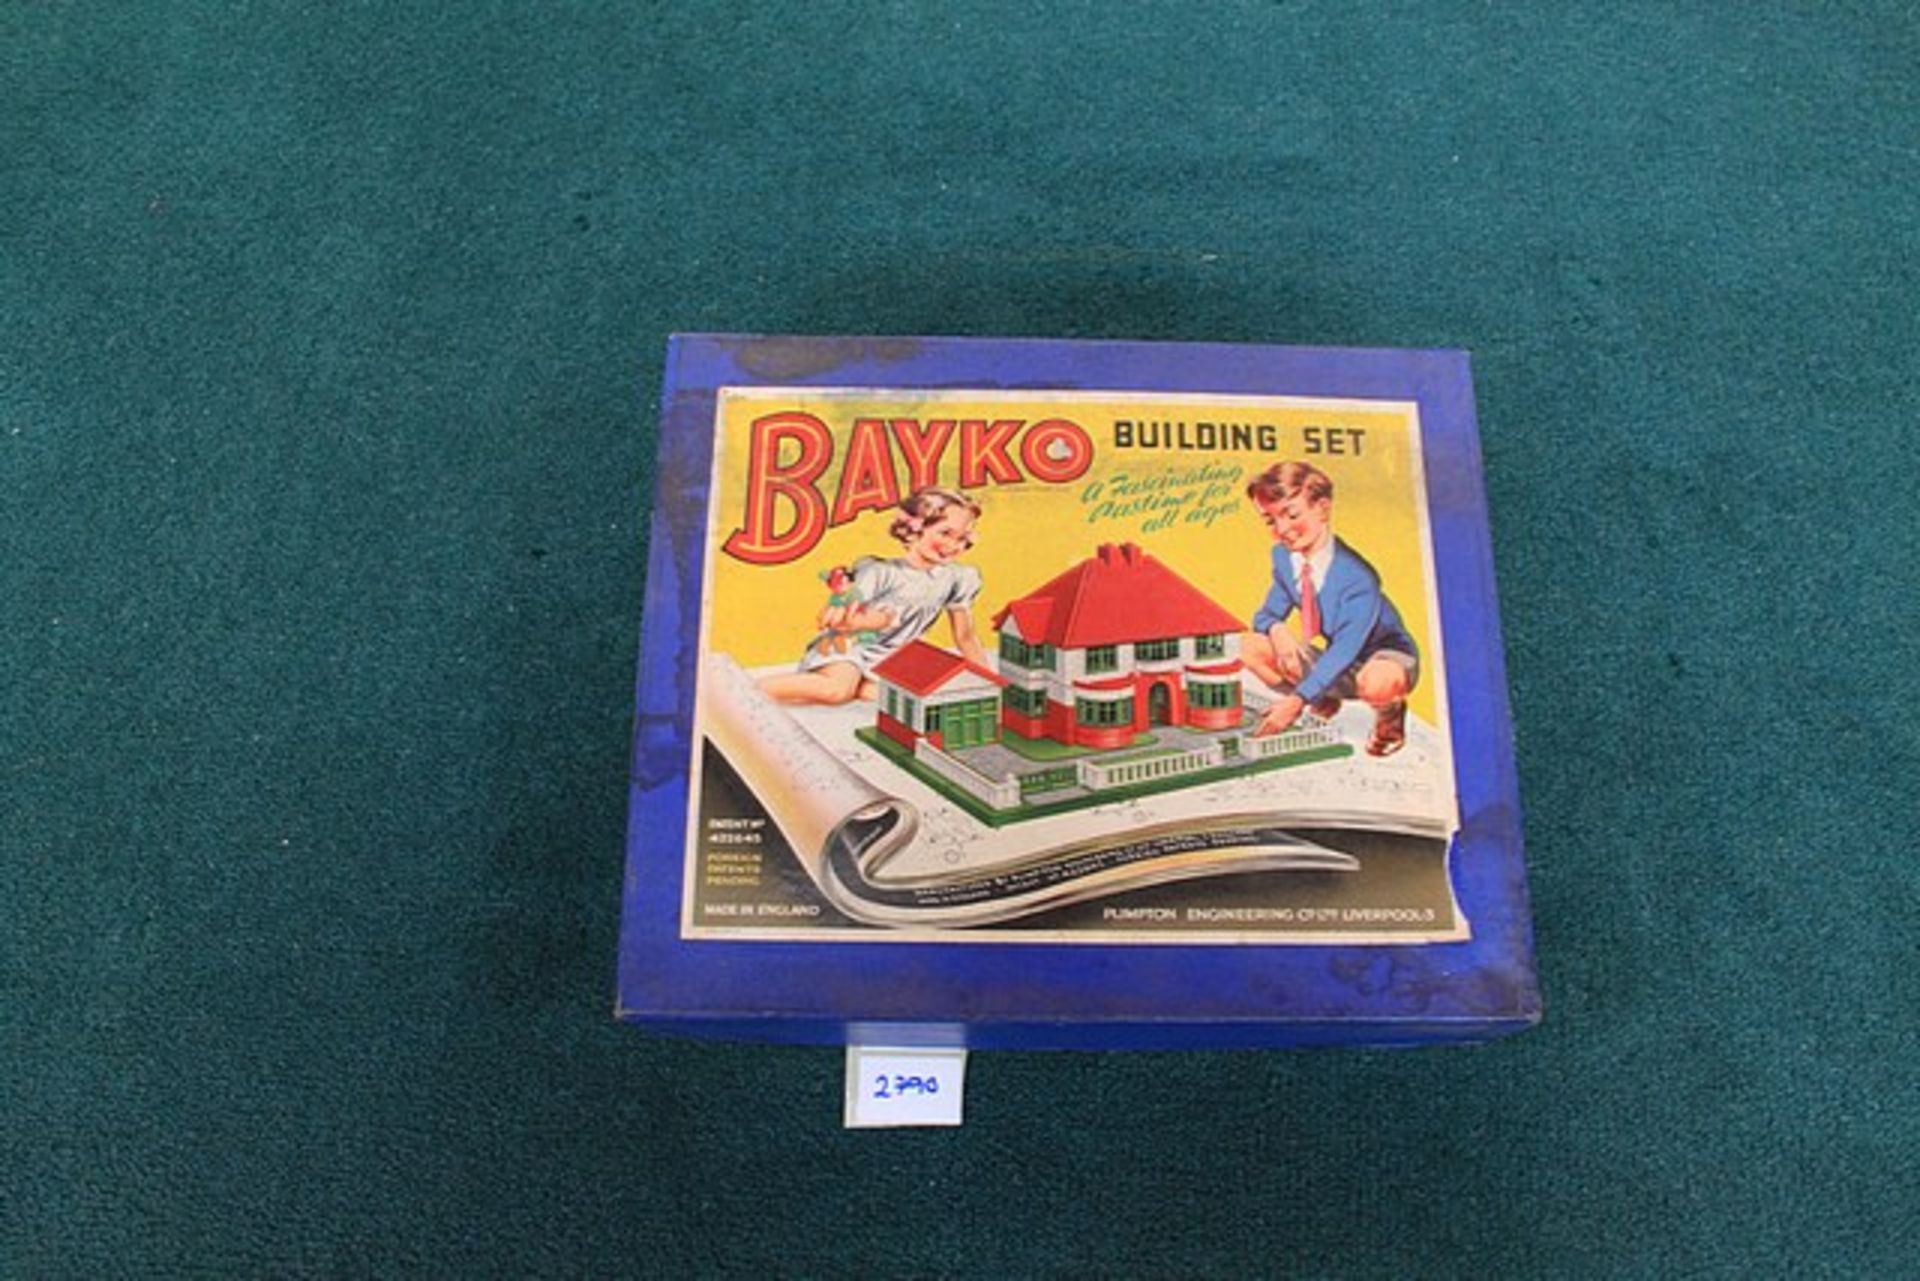 Plimpton Engineering Co Ltd Bayko Building Set 0 1951 With Box